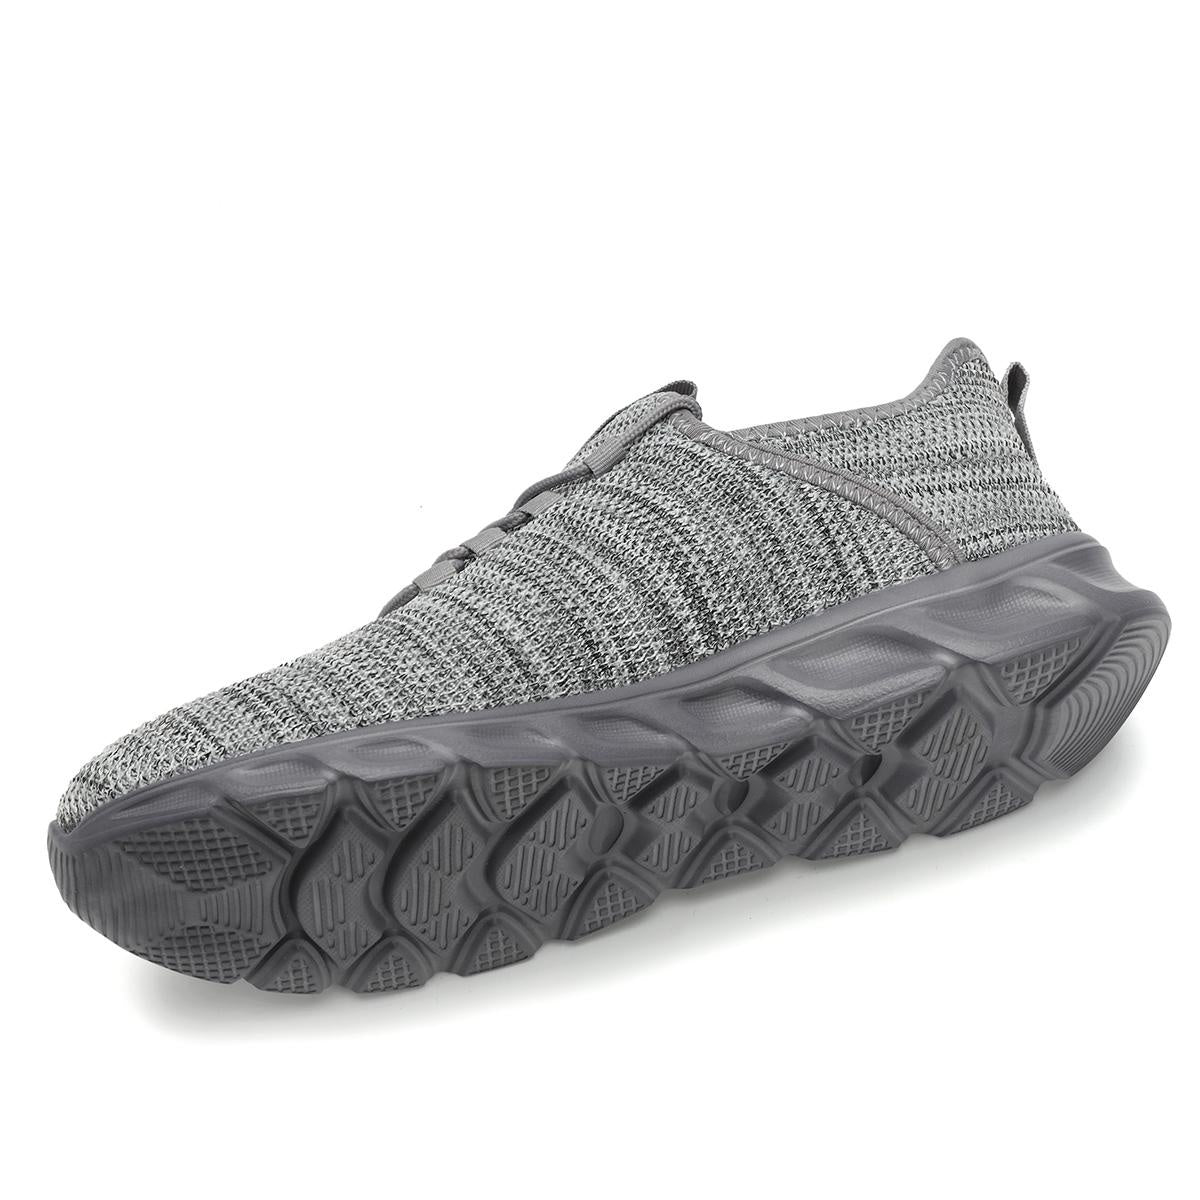 Damyuan Sneakers for Man Lightweight Running Comfort Casual Walking Fashion Sneaker